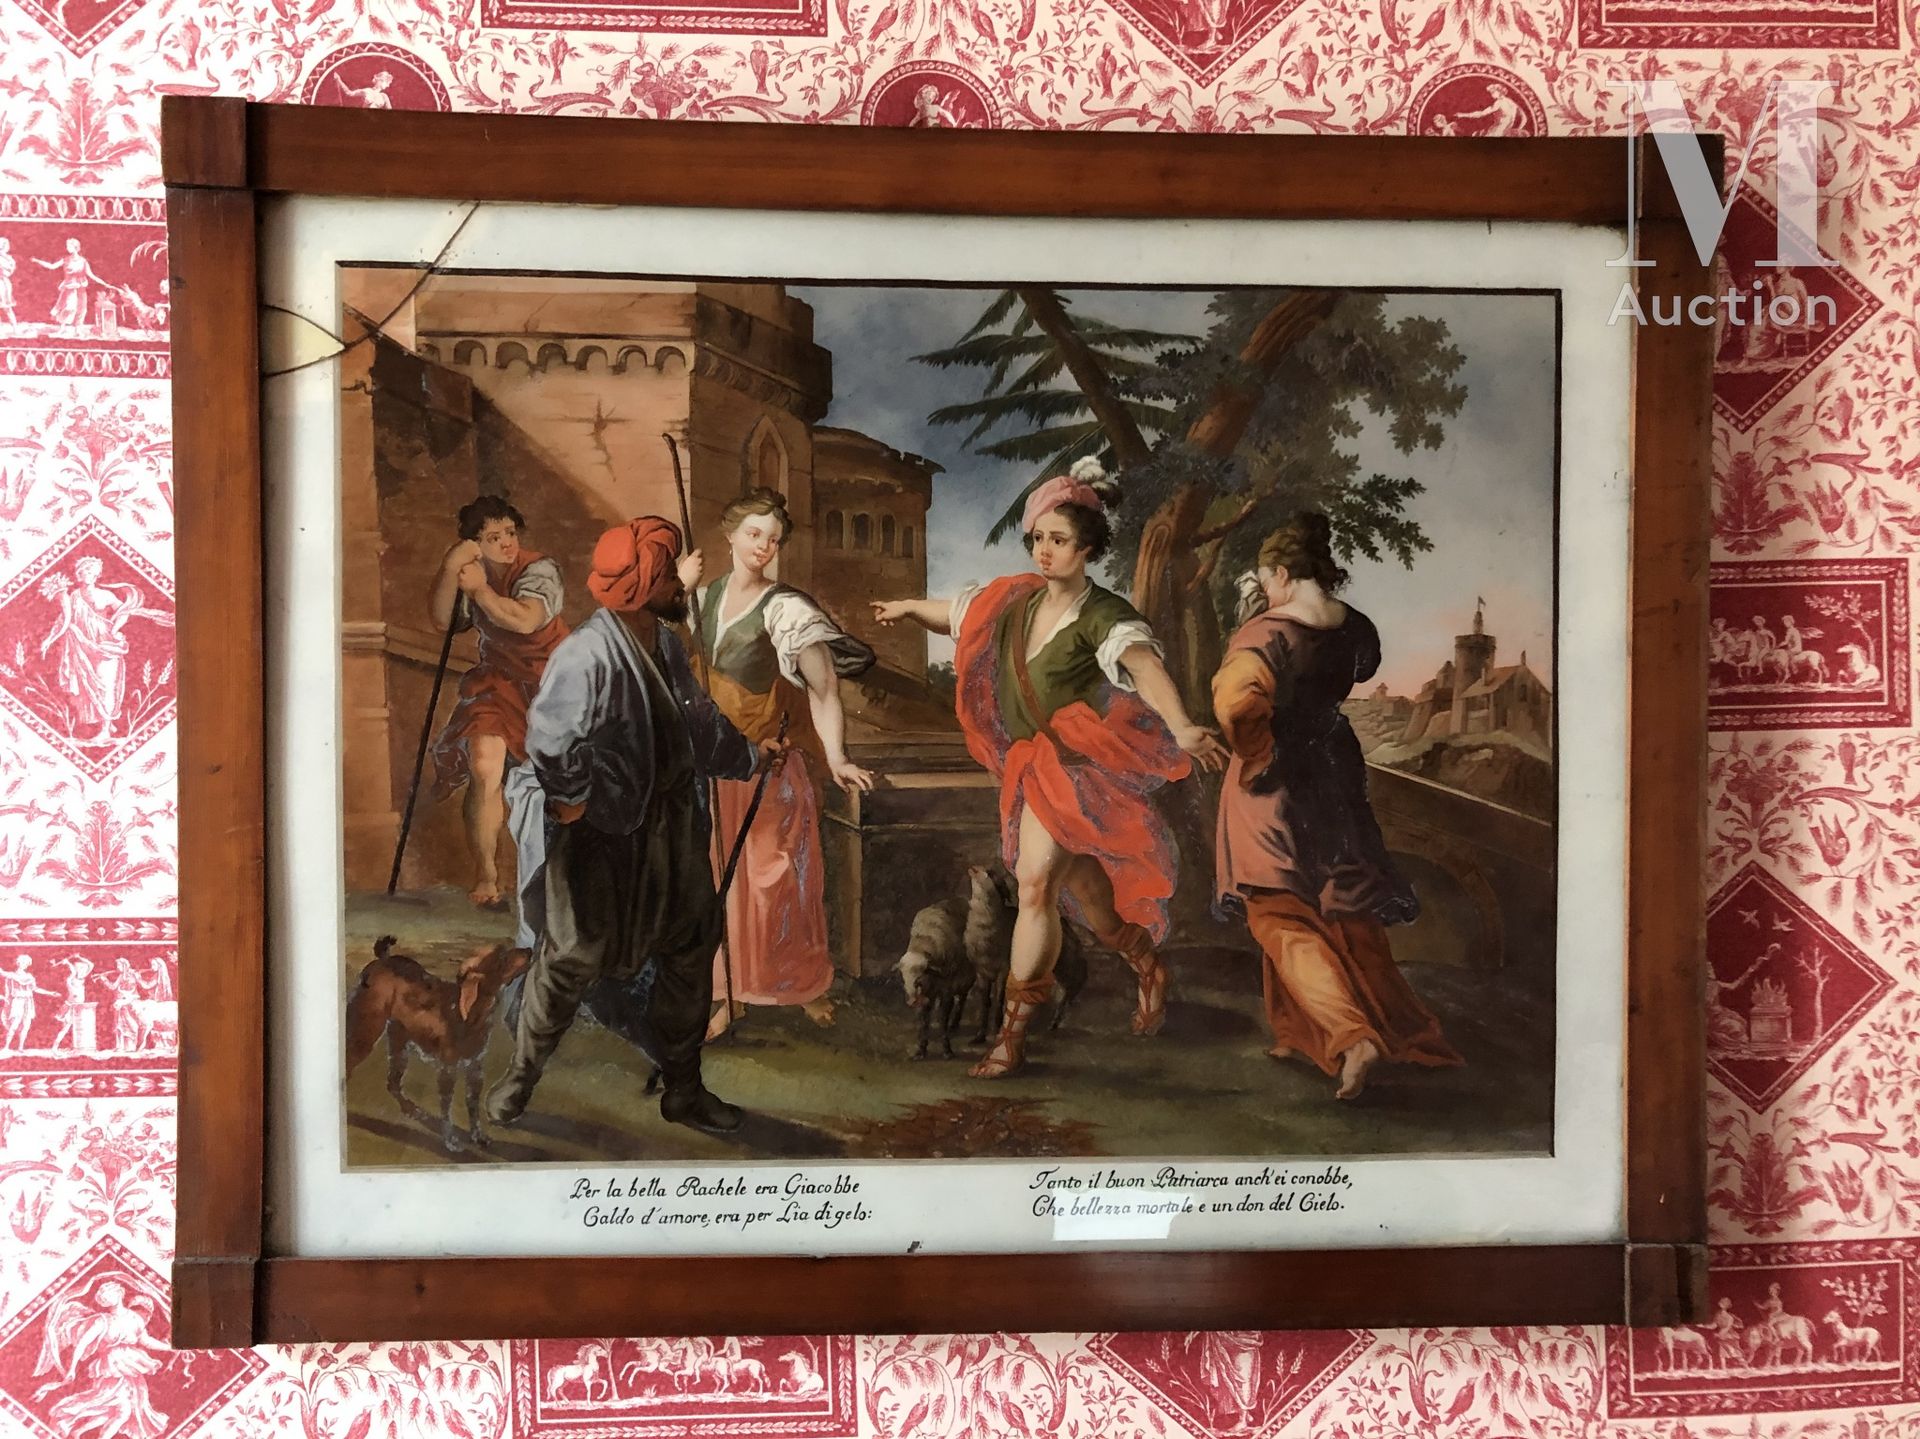 FIXE SOUS VERRE Rachel und Jacobé

18. Jahrhundert 

Unfälle 

46 x 60 cm